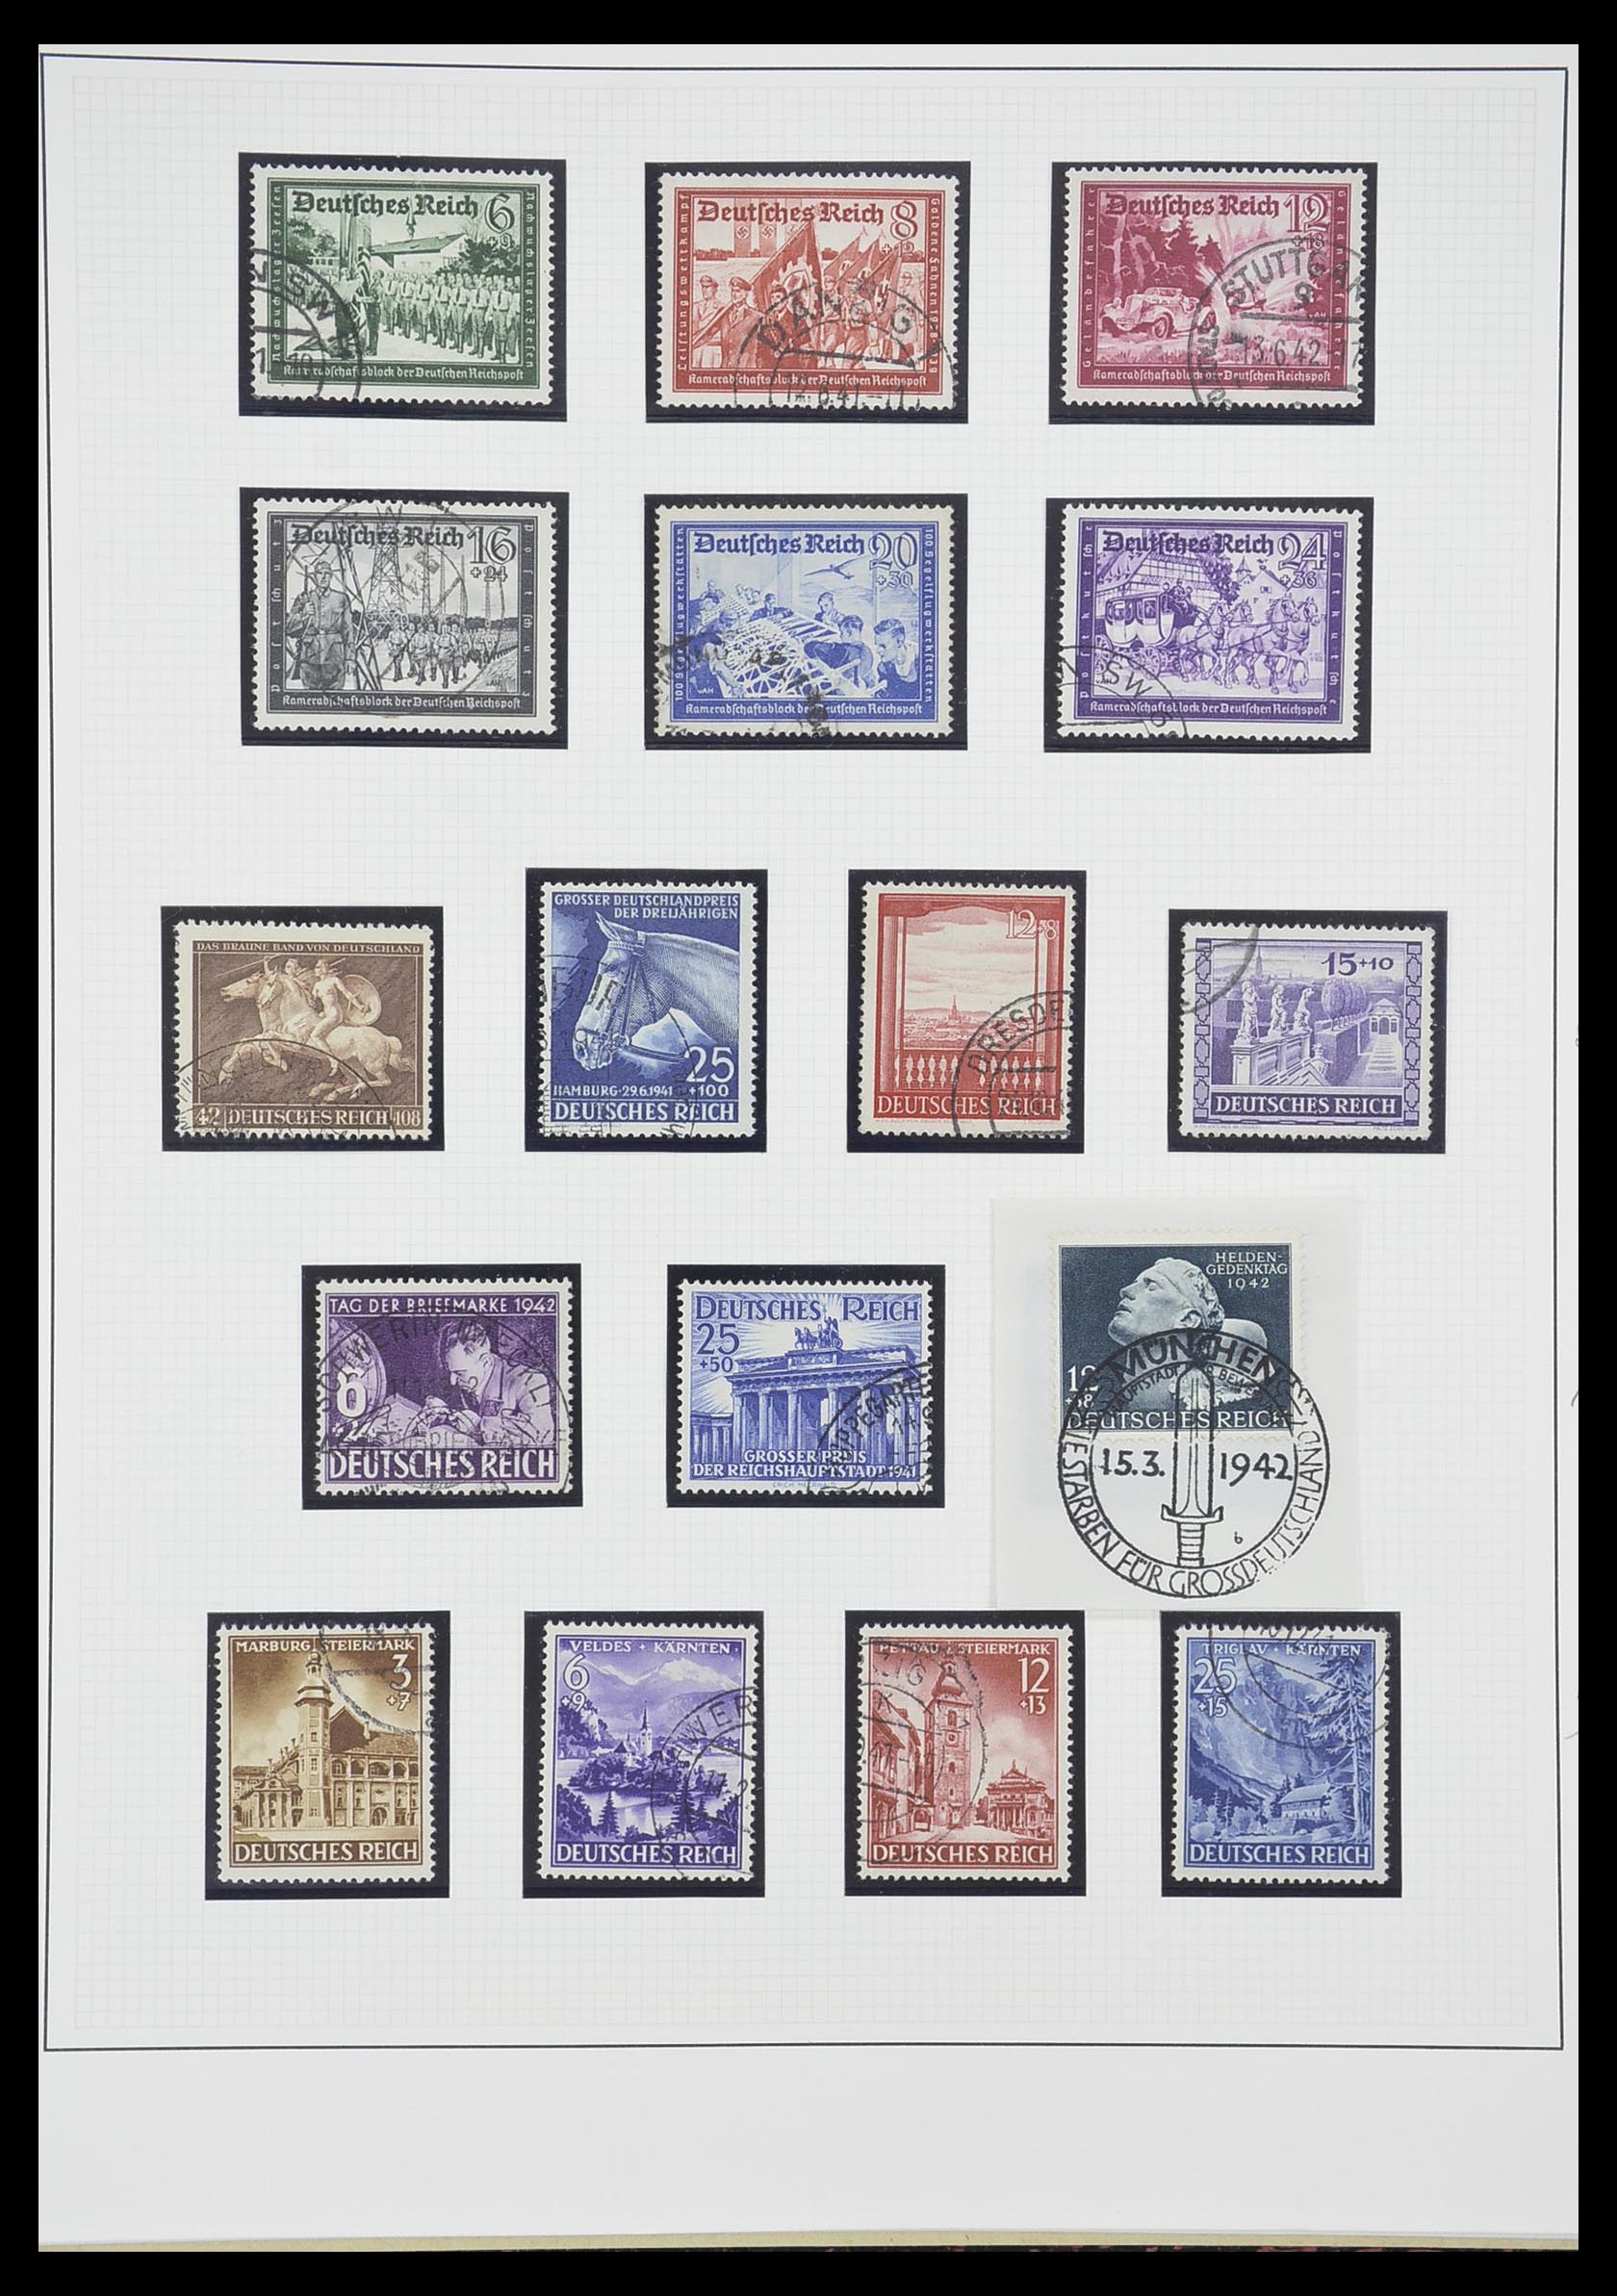 33222 033 - Stamp collection 33222 German Reich 1923-1945.